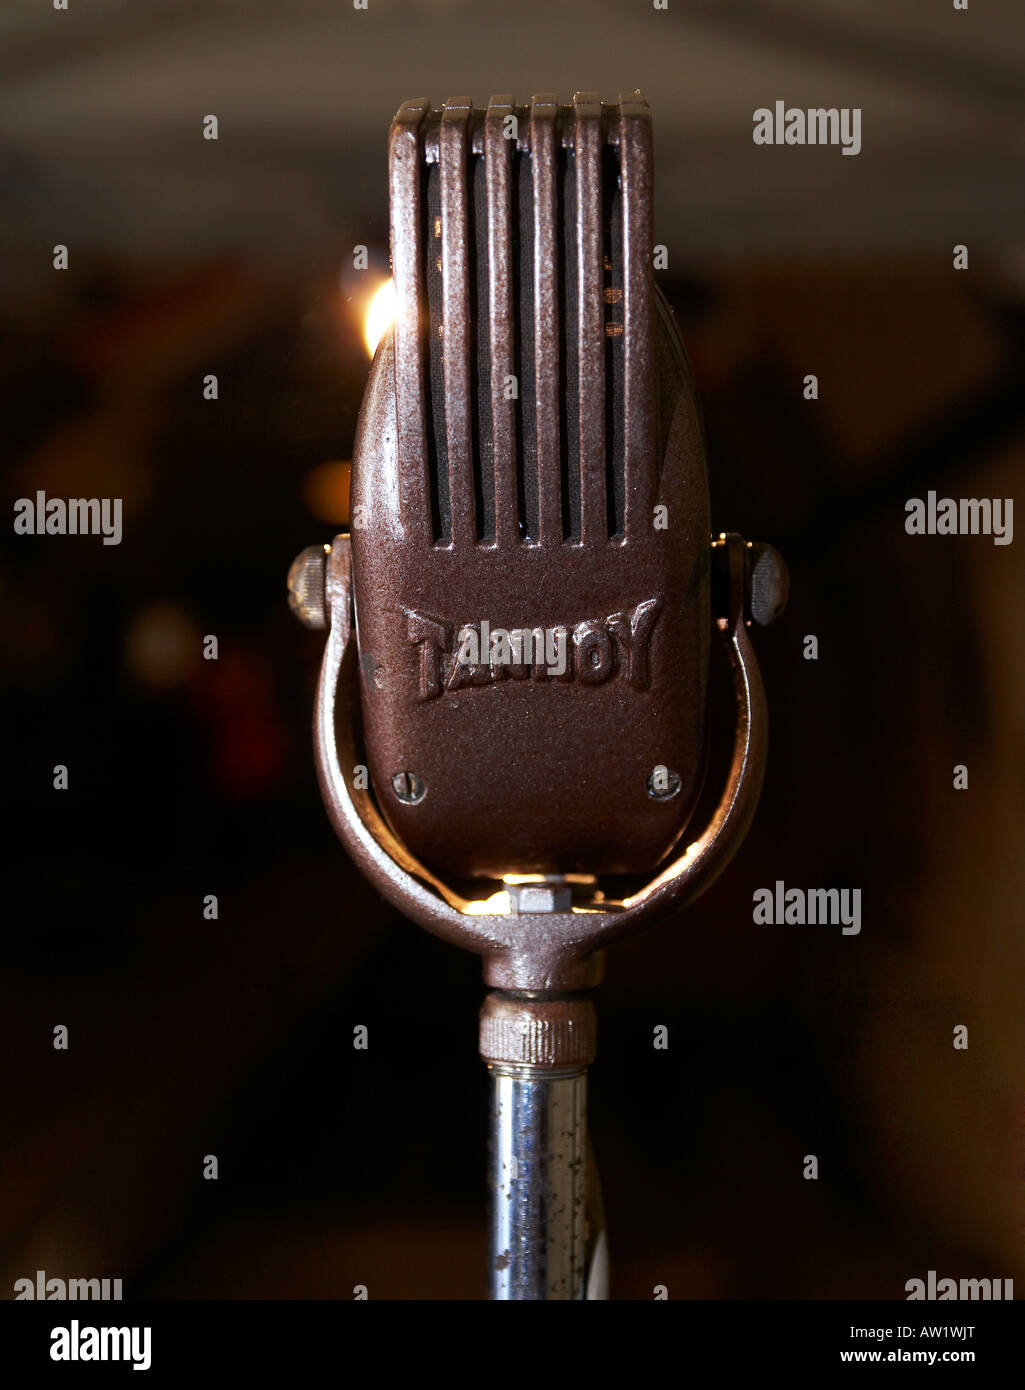 Tannoy microphone Stock Photo - Alamy